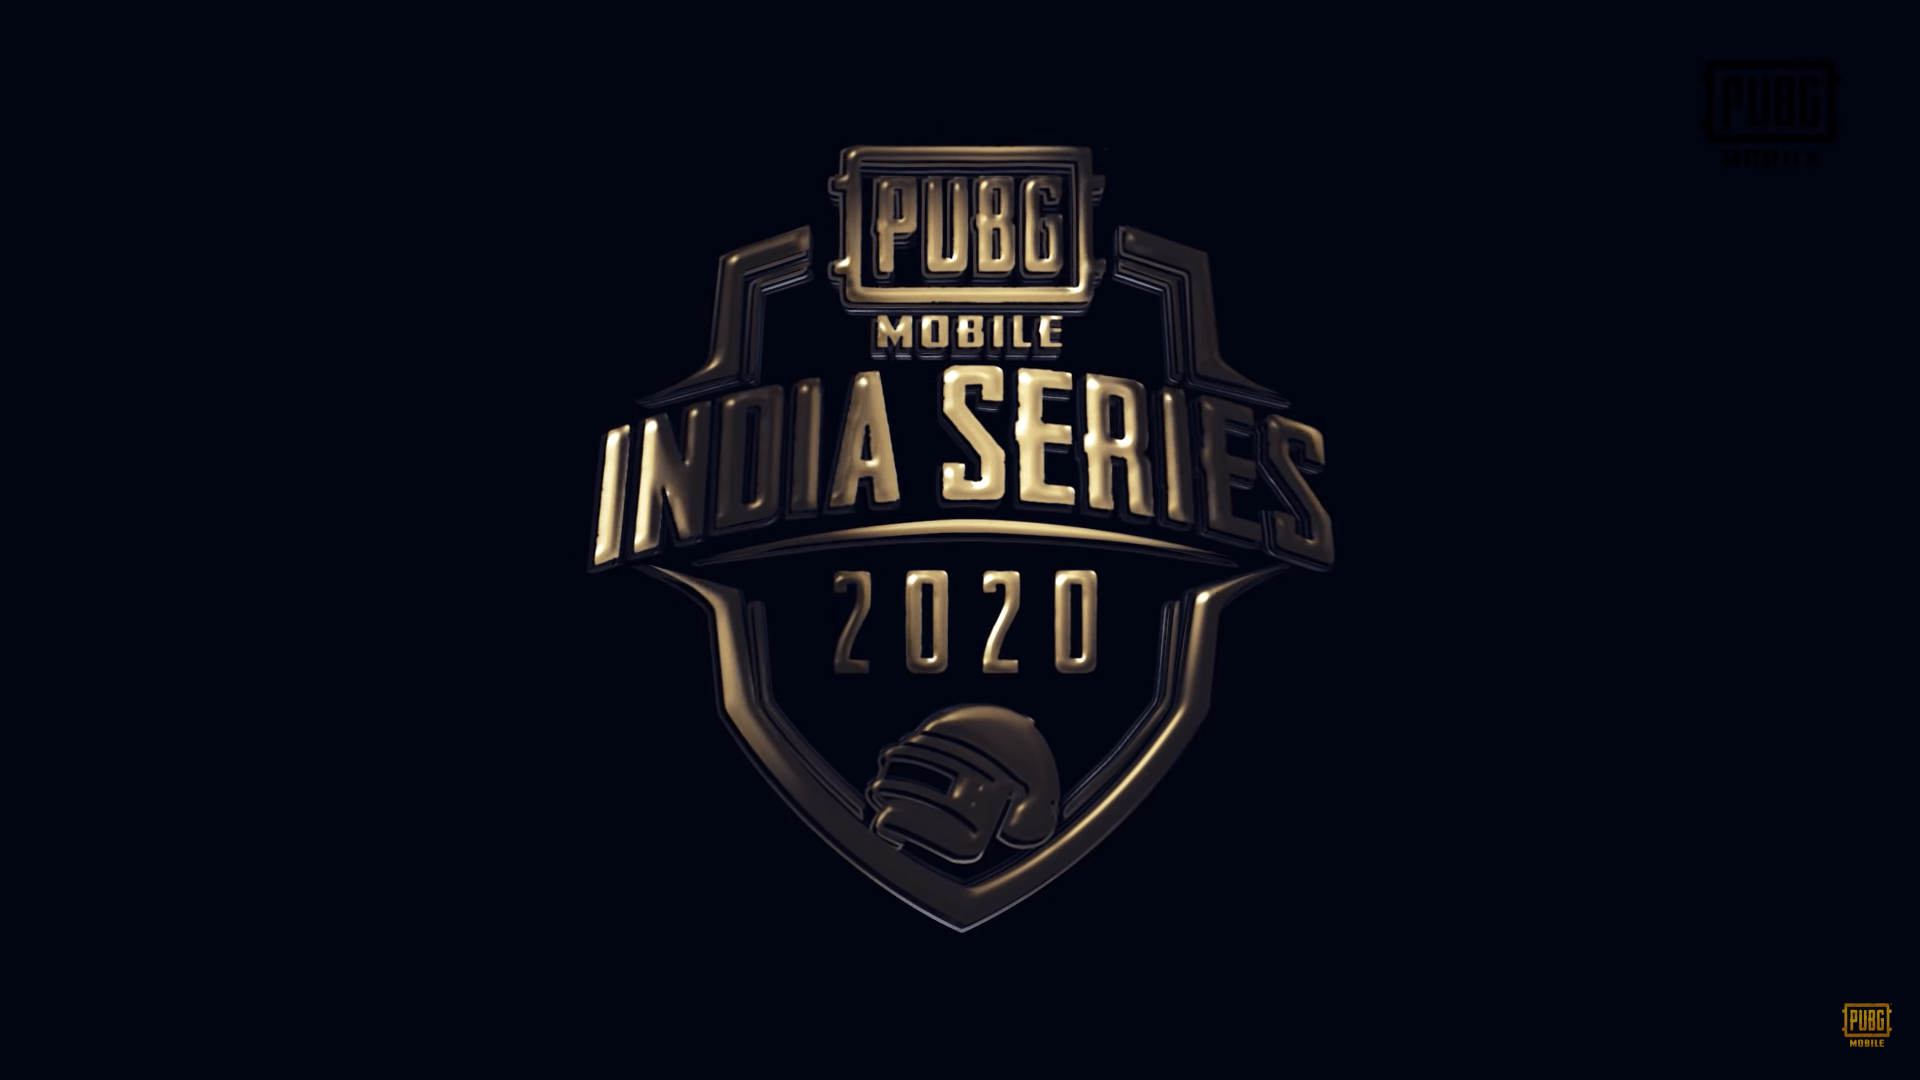 PUBG MOBILE INDIA SERIES 2020 DUYURULDU!